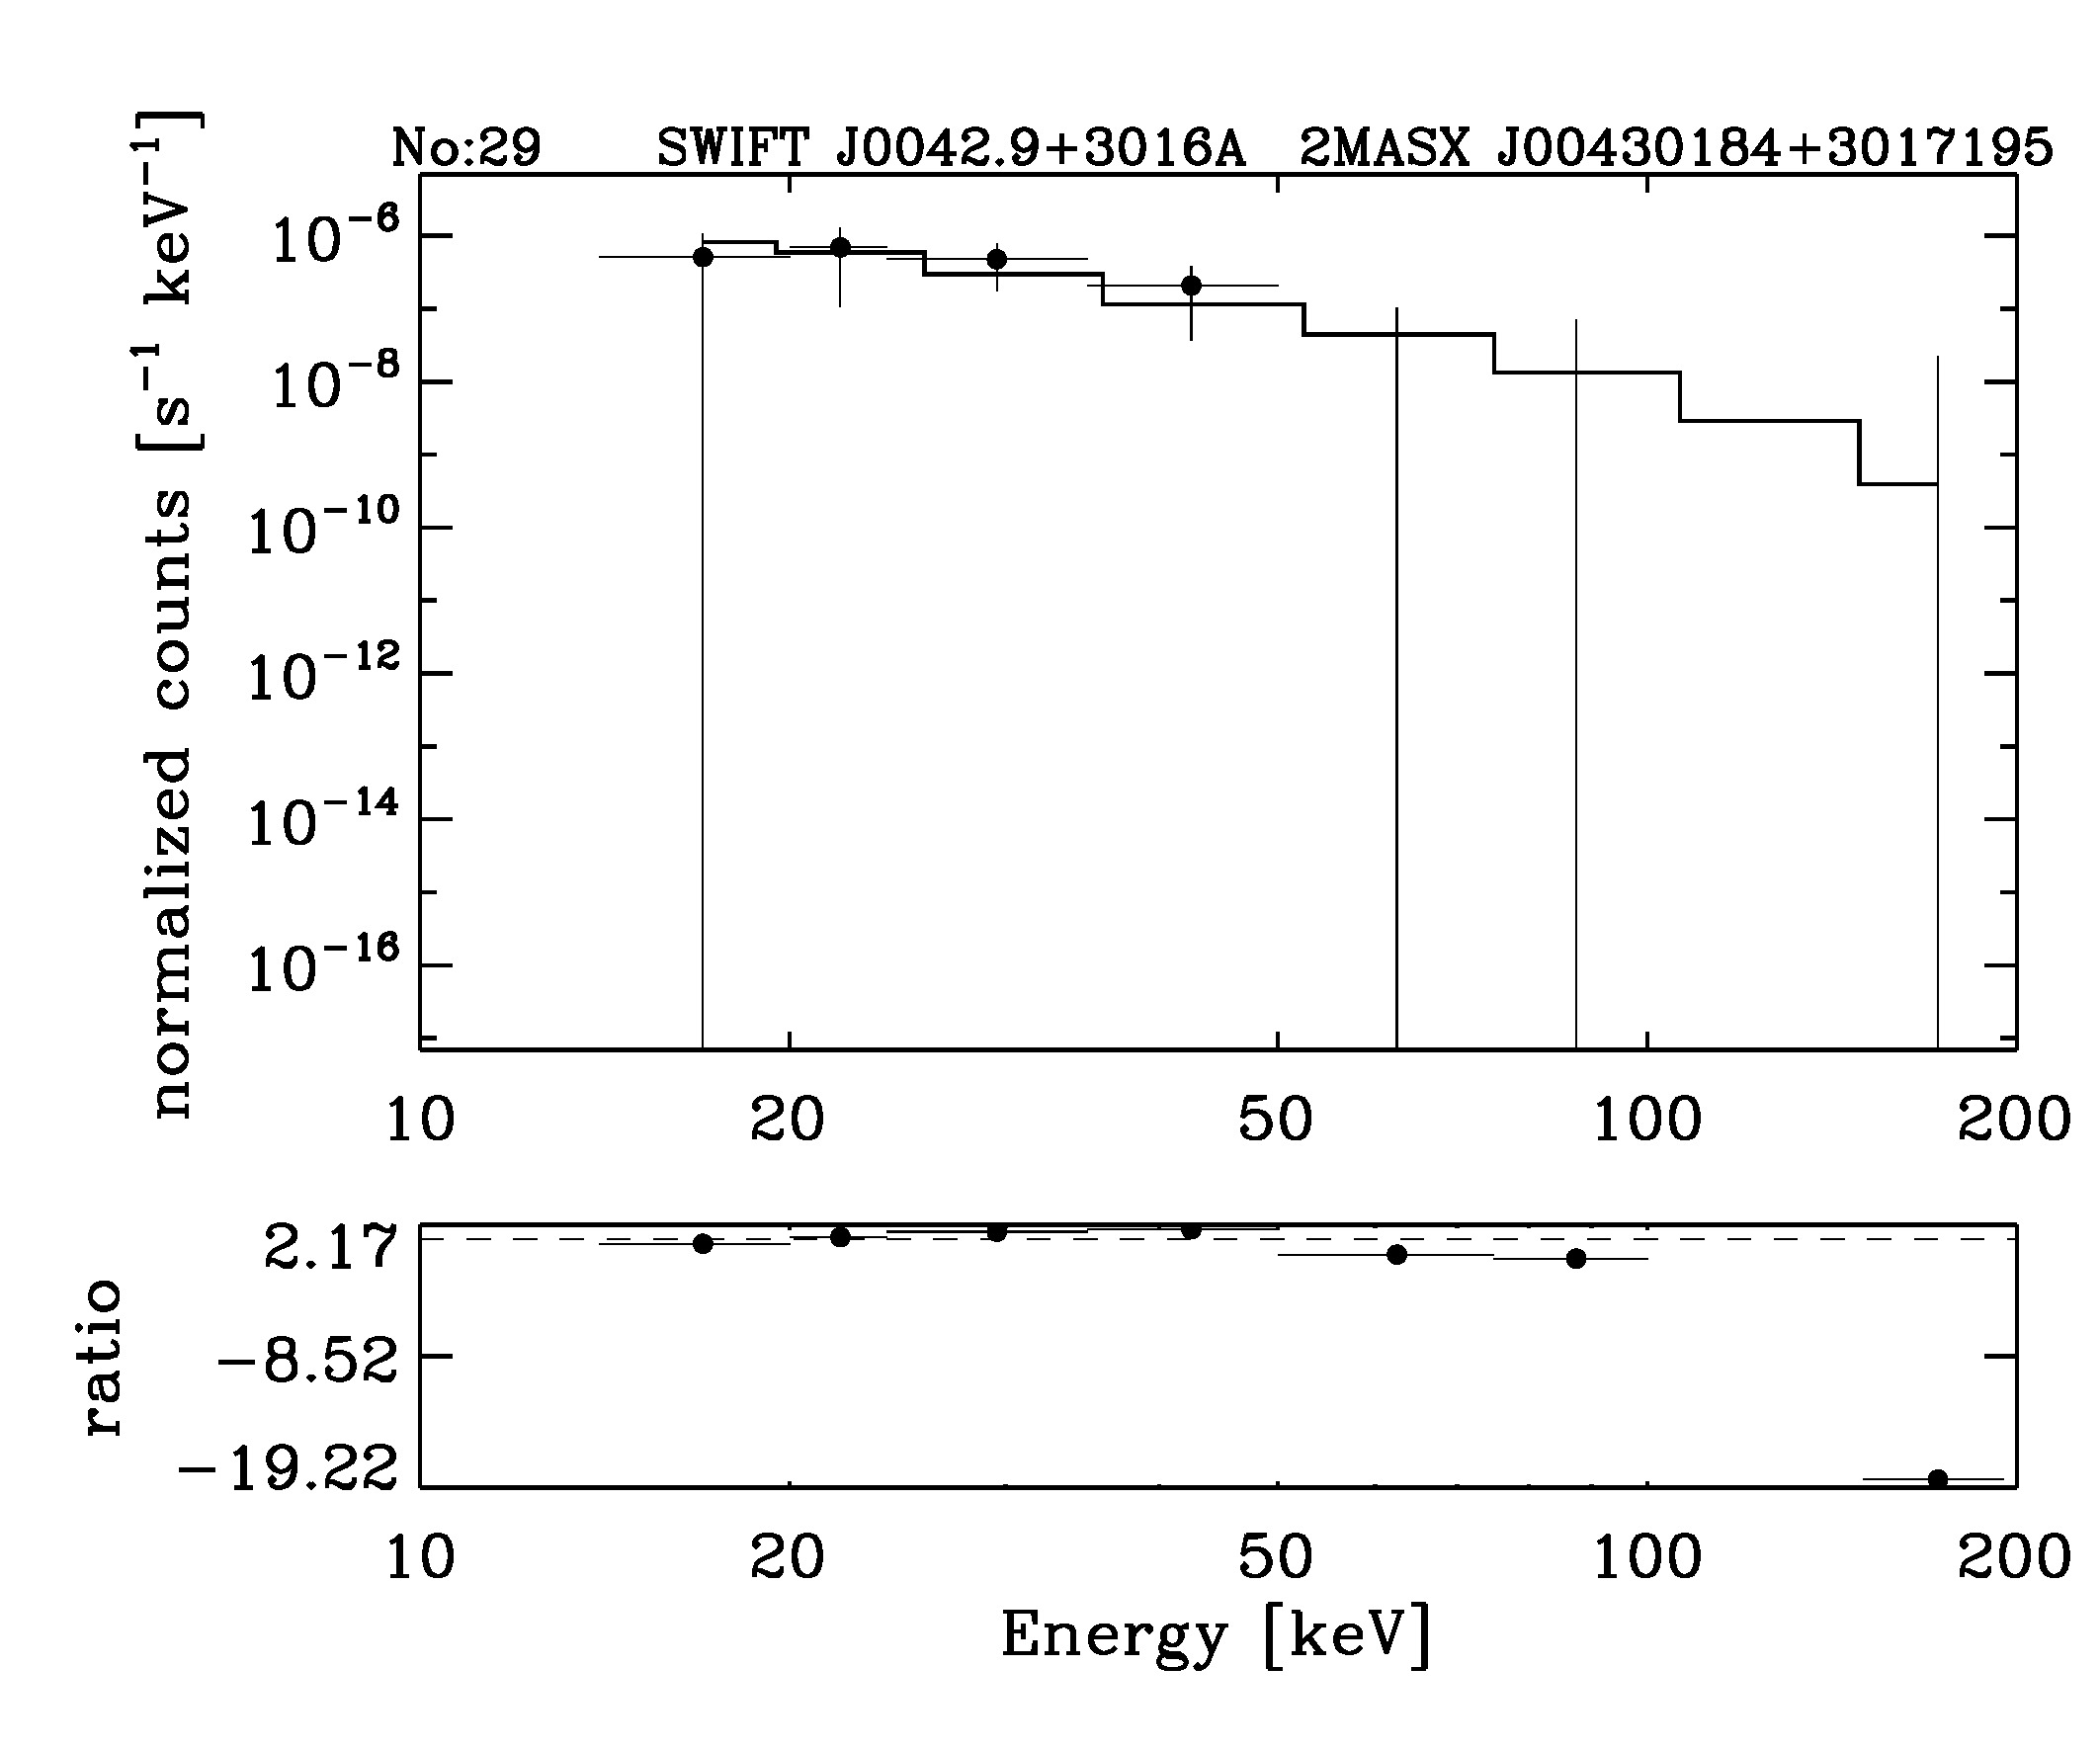 BAT Spectrum for SWIFT J0042.9+3016A